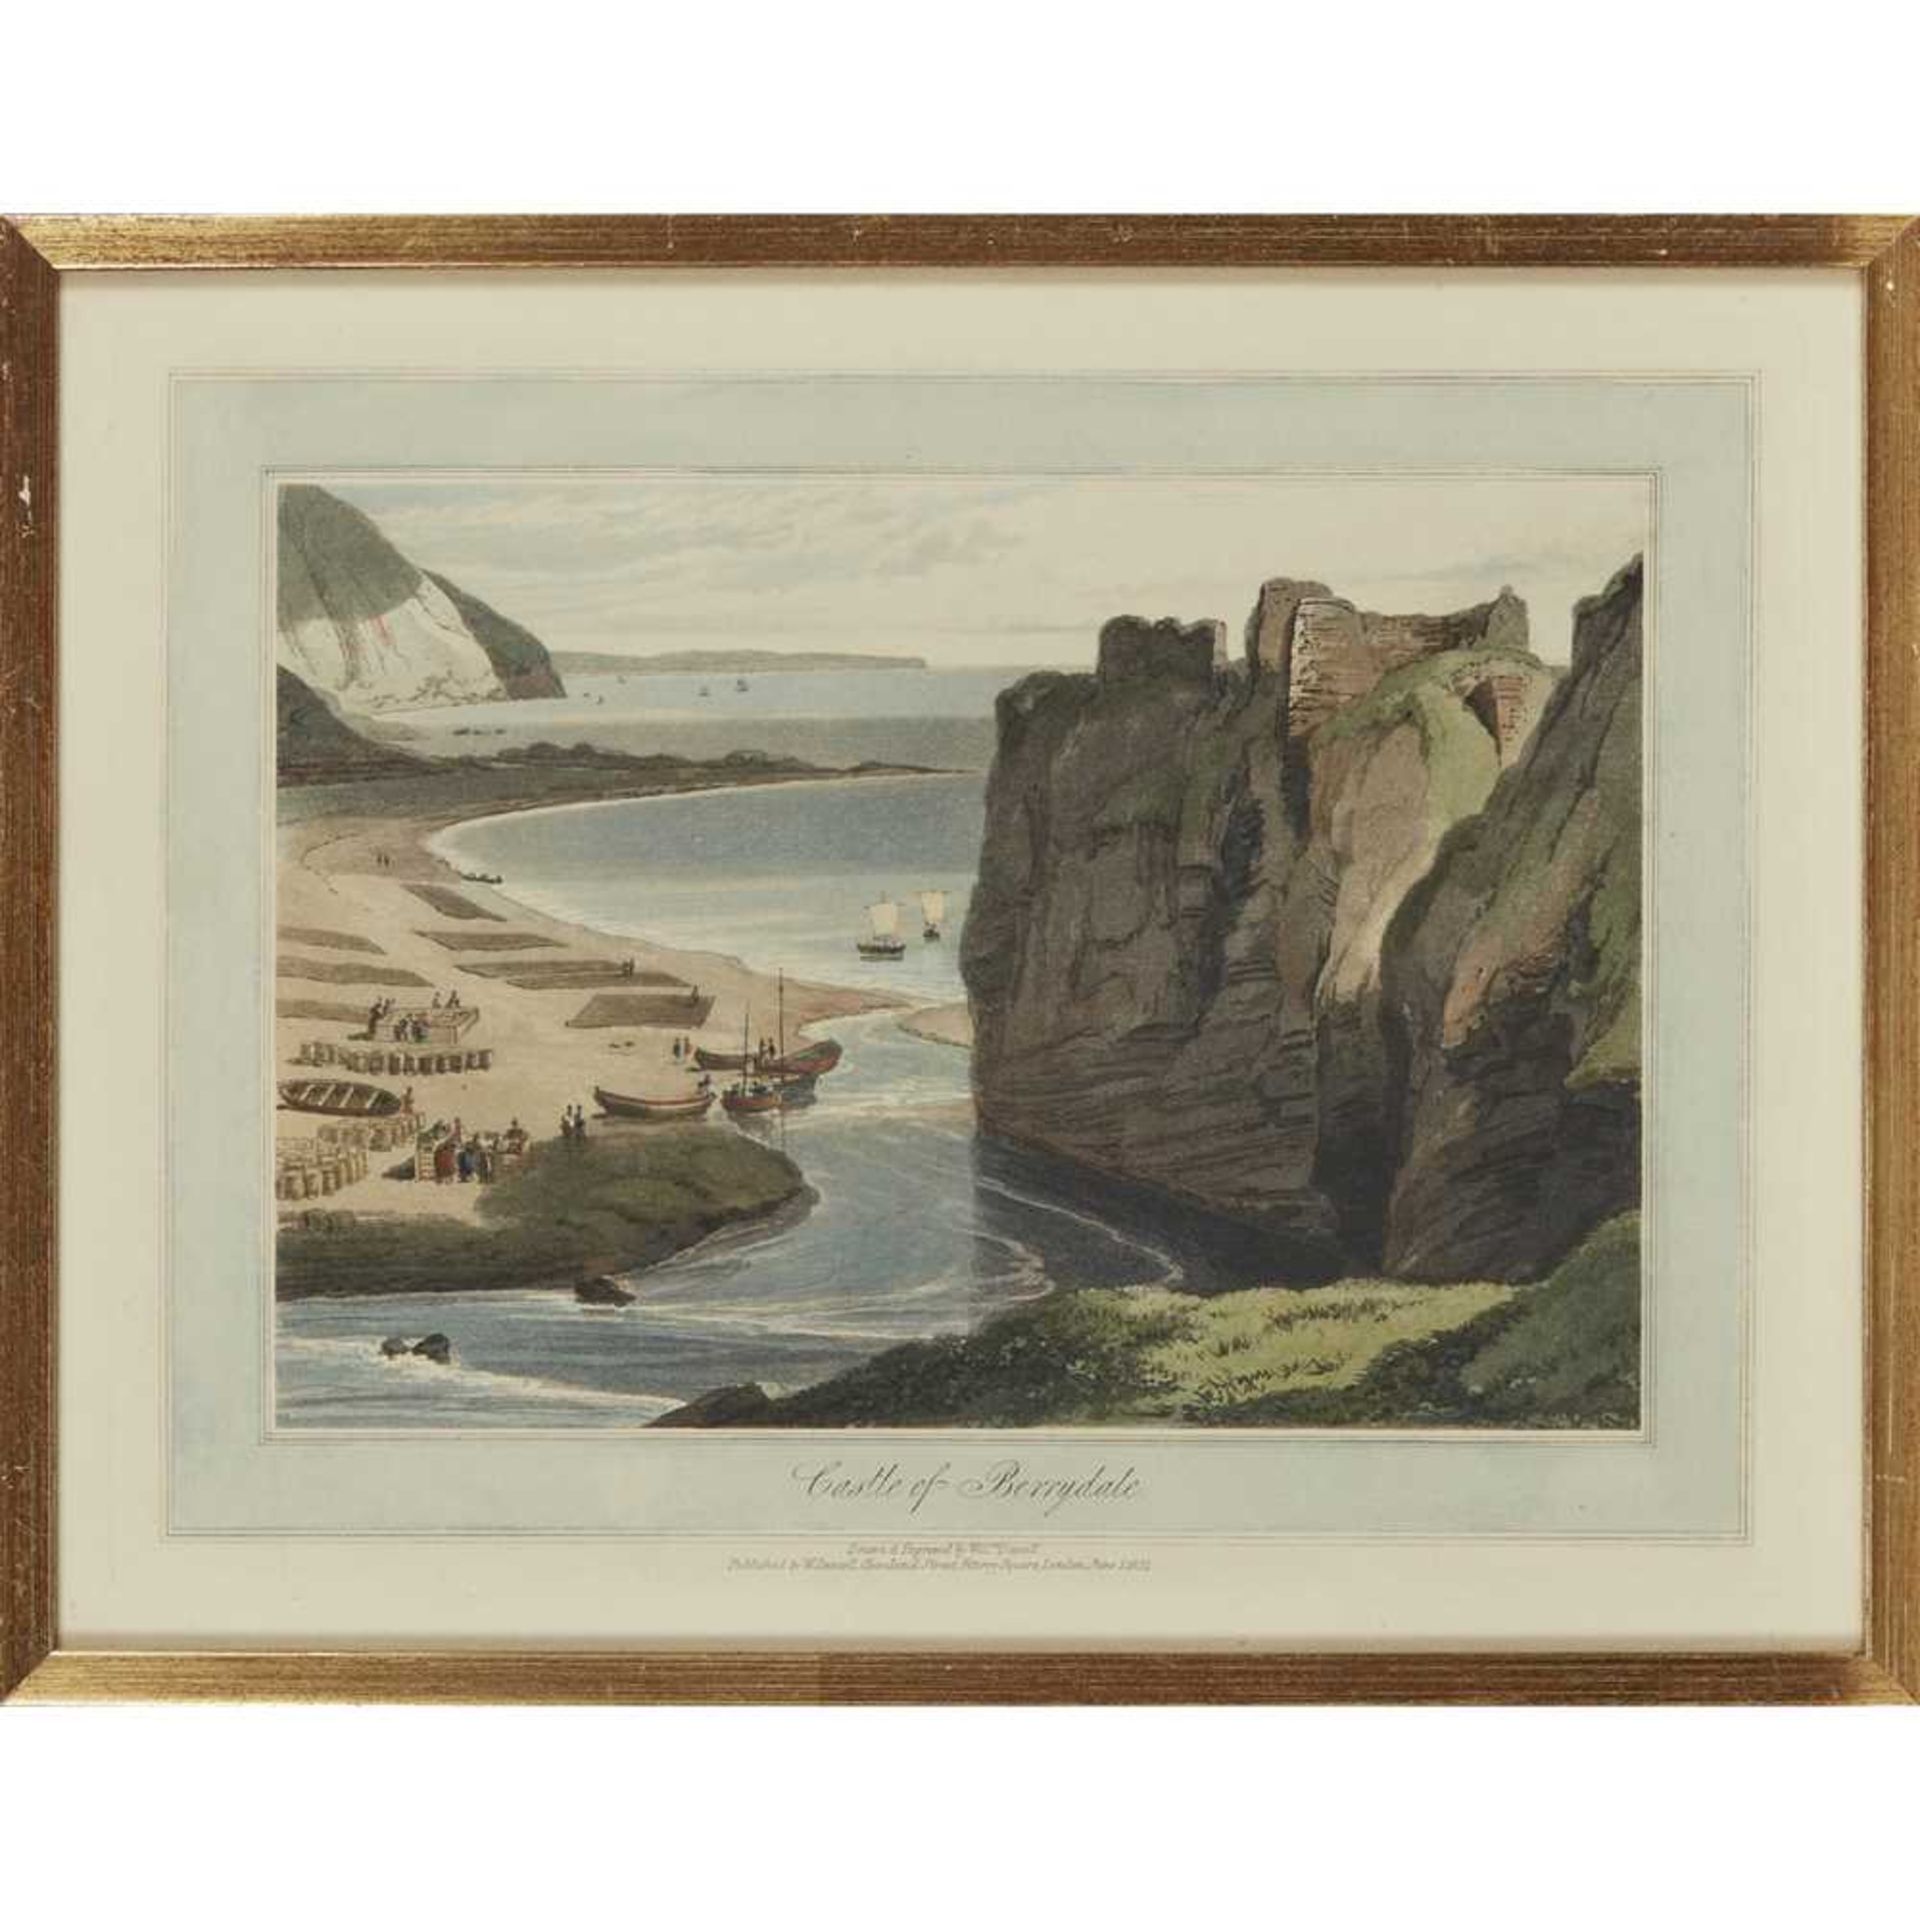 Scottish Prints 14 framed images Rattar, J.D. The Knab, Lerwick, silver gelatin print, 26 x 20cm; - Image 8 of 42